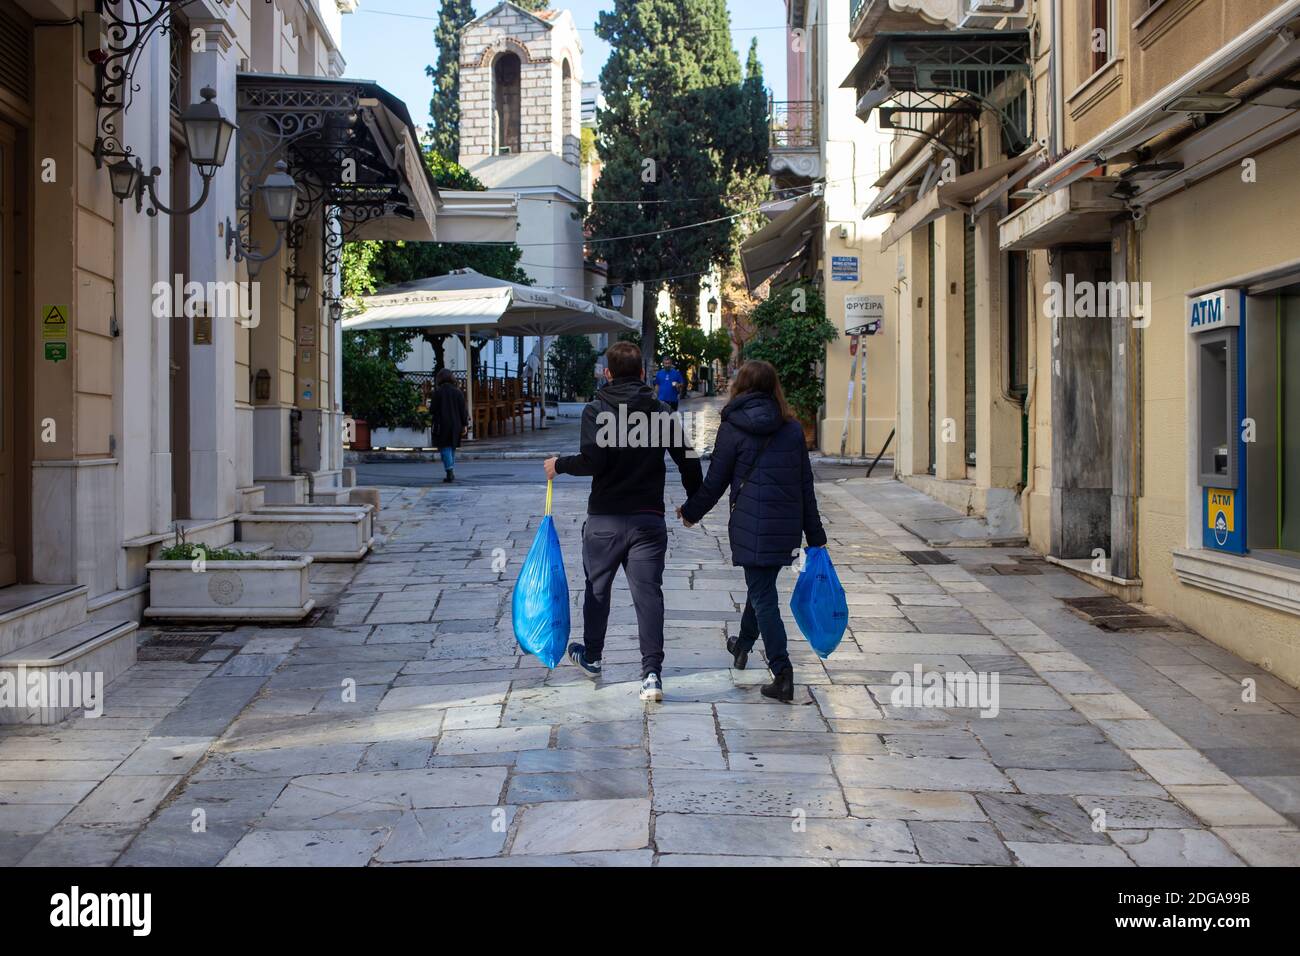 Athens city center, Greece. December 5 2020. Young couple holding garbage bags rear view, city center, Kydathinaion street, Plaka. Coronavirus pandemi Stock Photo